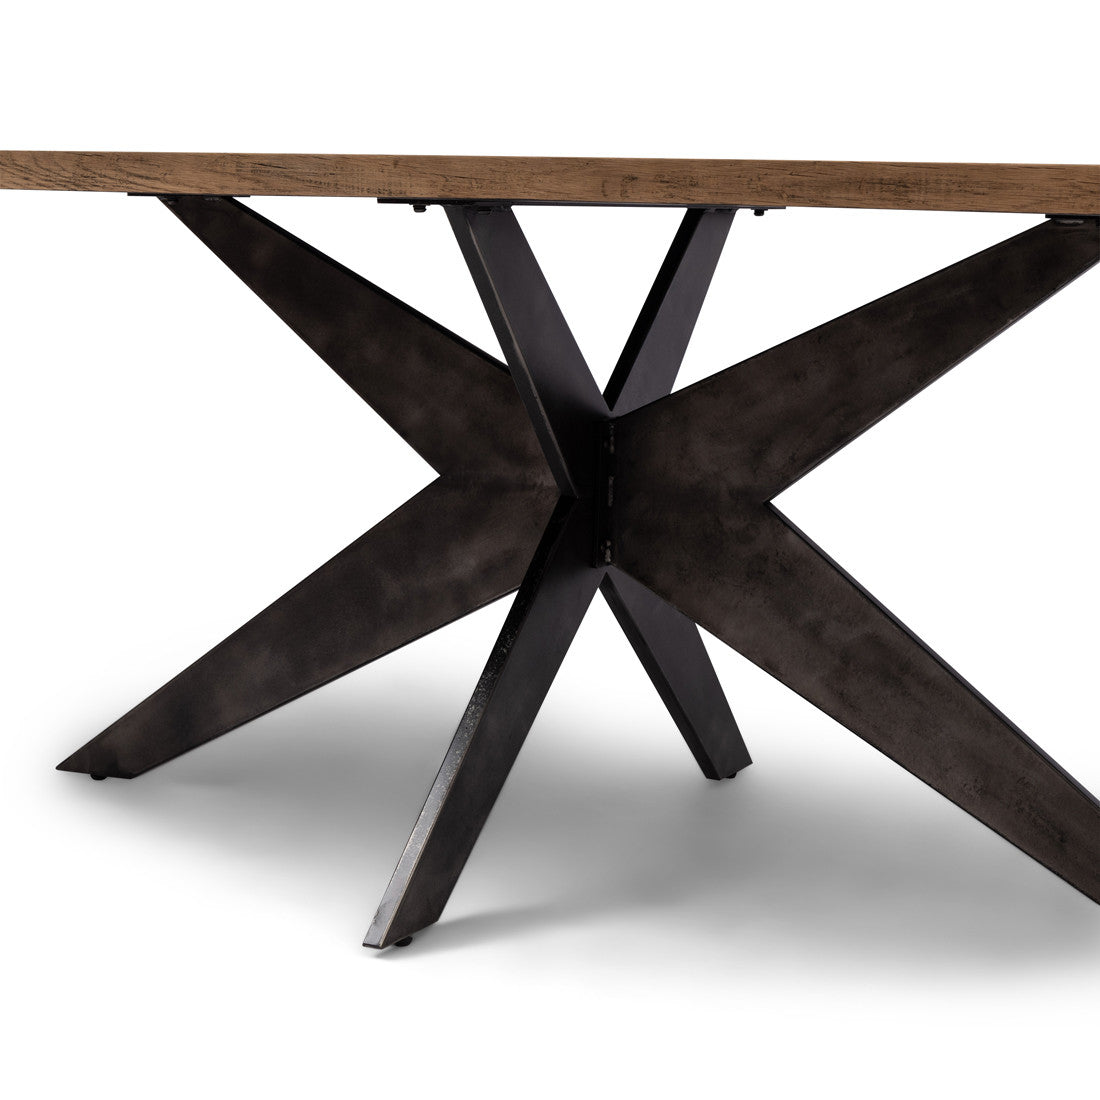 Falcon Crest Dining Table, 230cm x 100cm